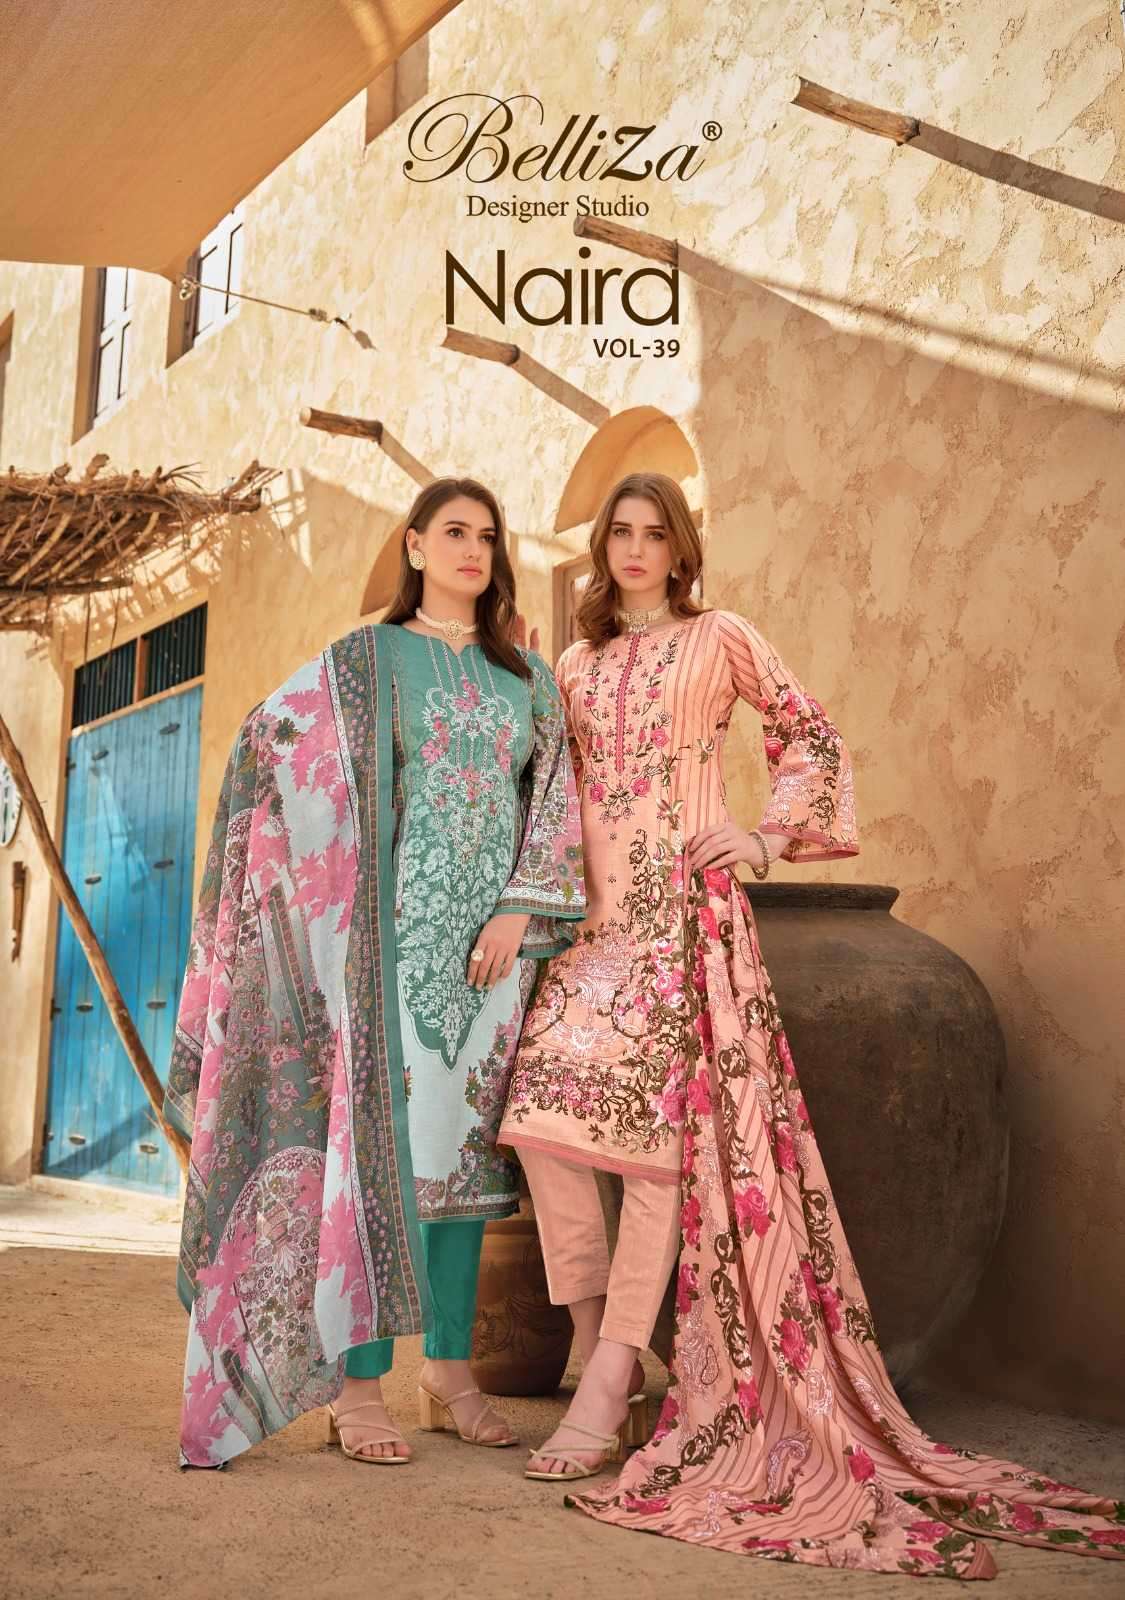 belliza naira vol 39 series 891001-891007 Pure Cotton Digital Prints suit